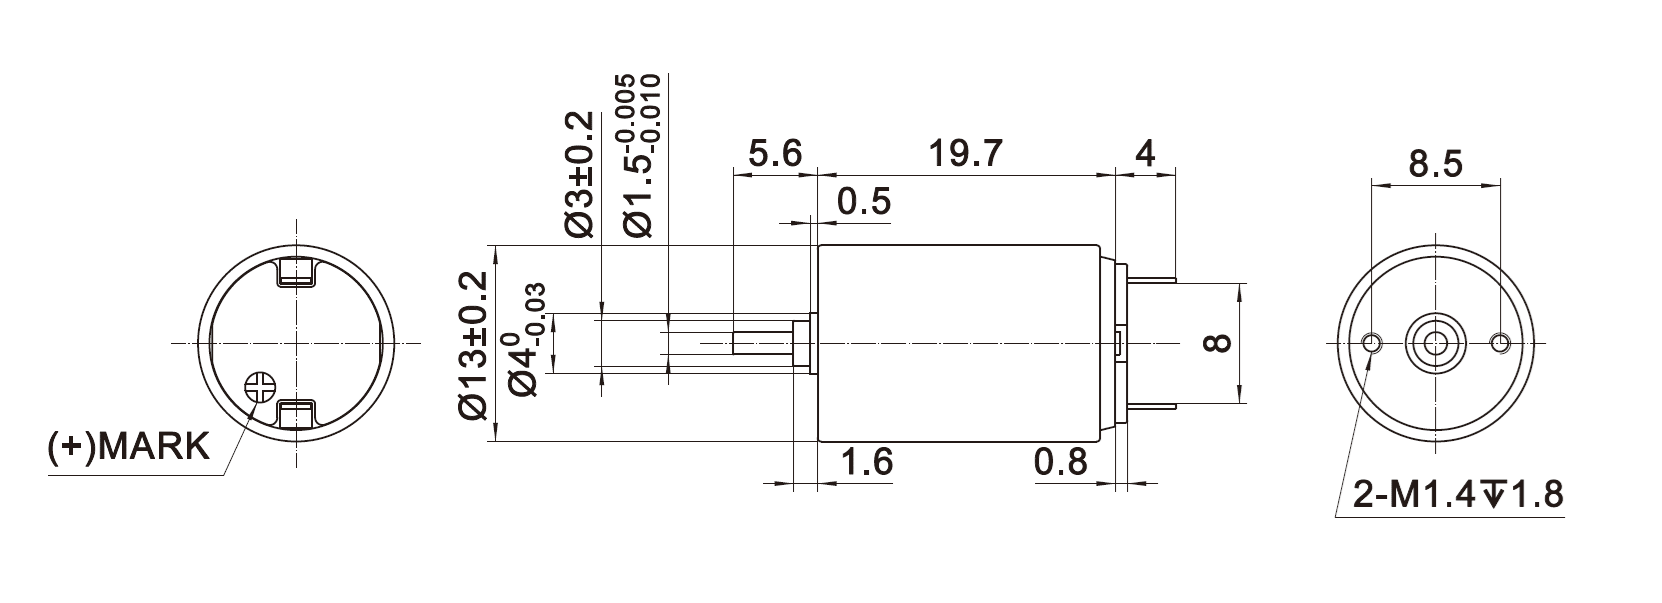 Dimension of DCU13020 Coreless Brushed DC Motors